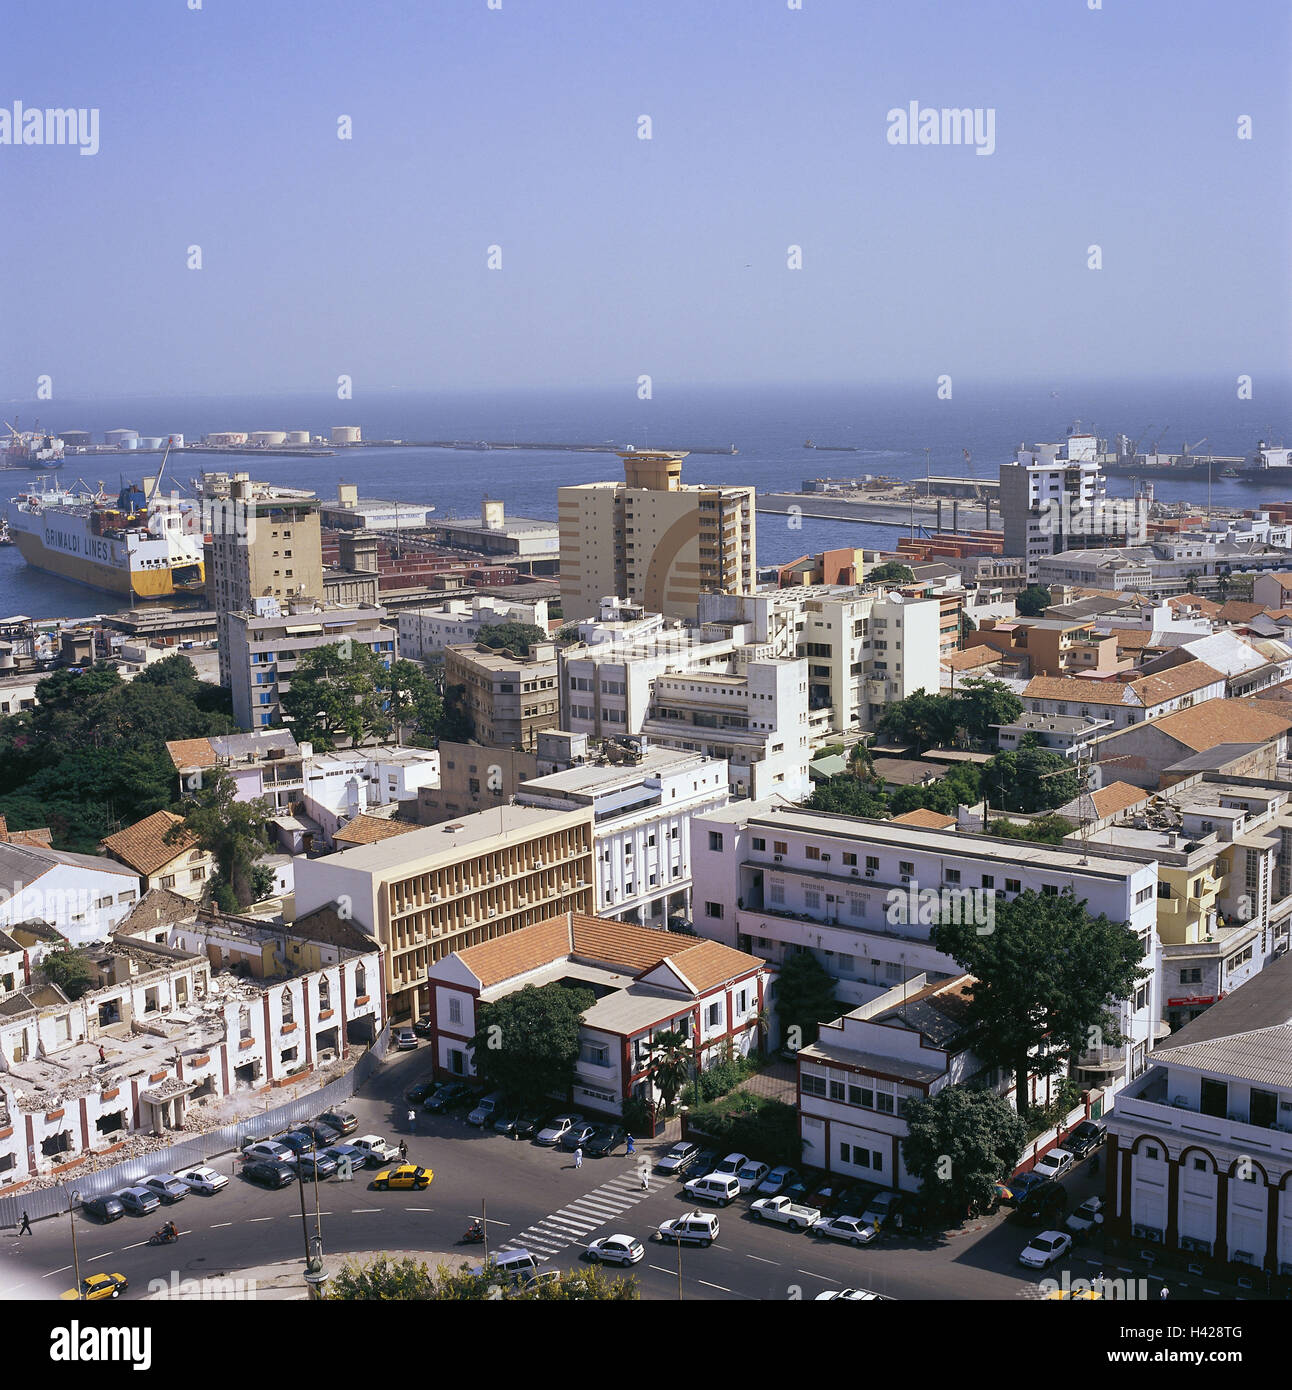 https://c8.alamy.com/comp/H428TG/senegal-dakar-town-overview-harbour-sea-africa-west-africa-peninsula-H428TG.jpg